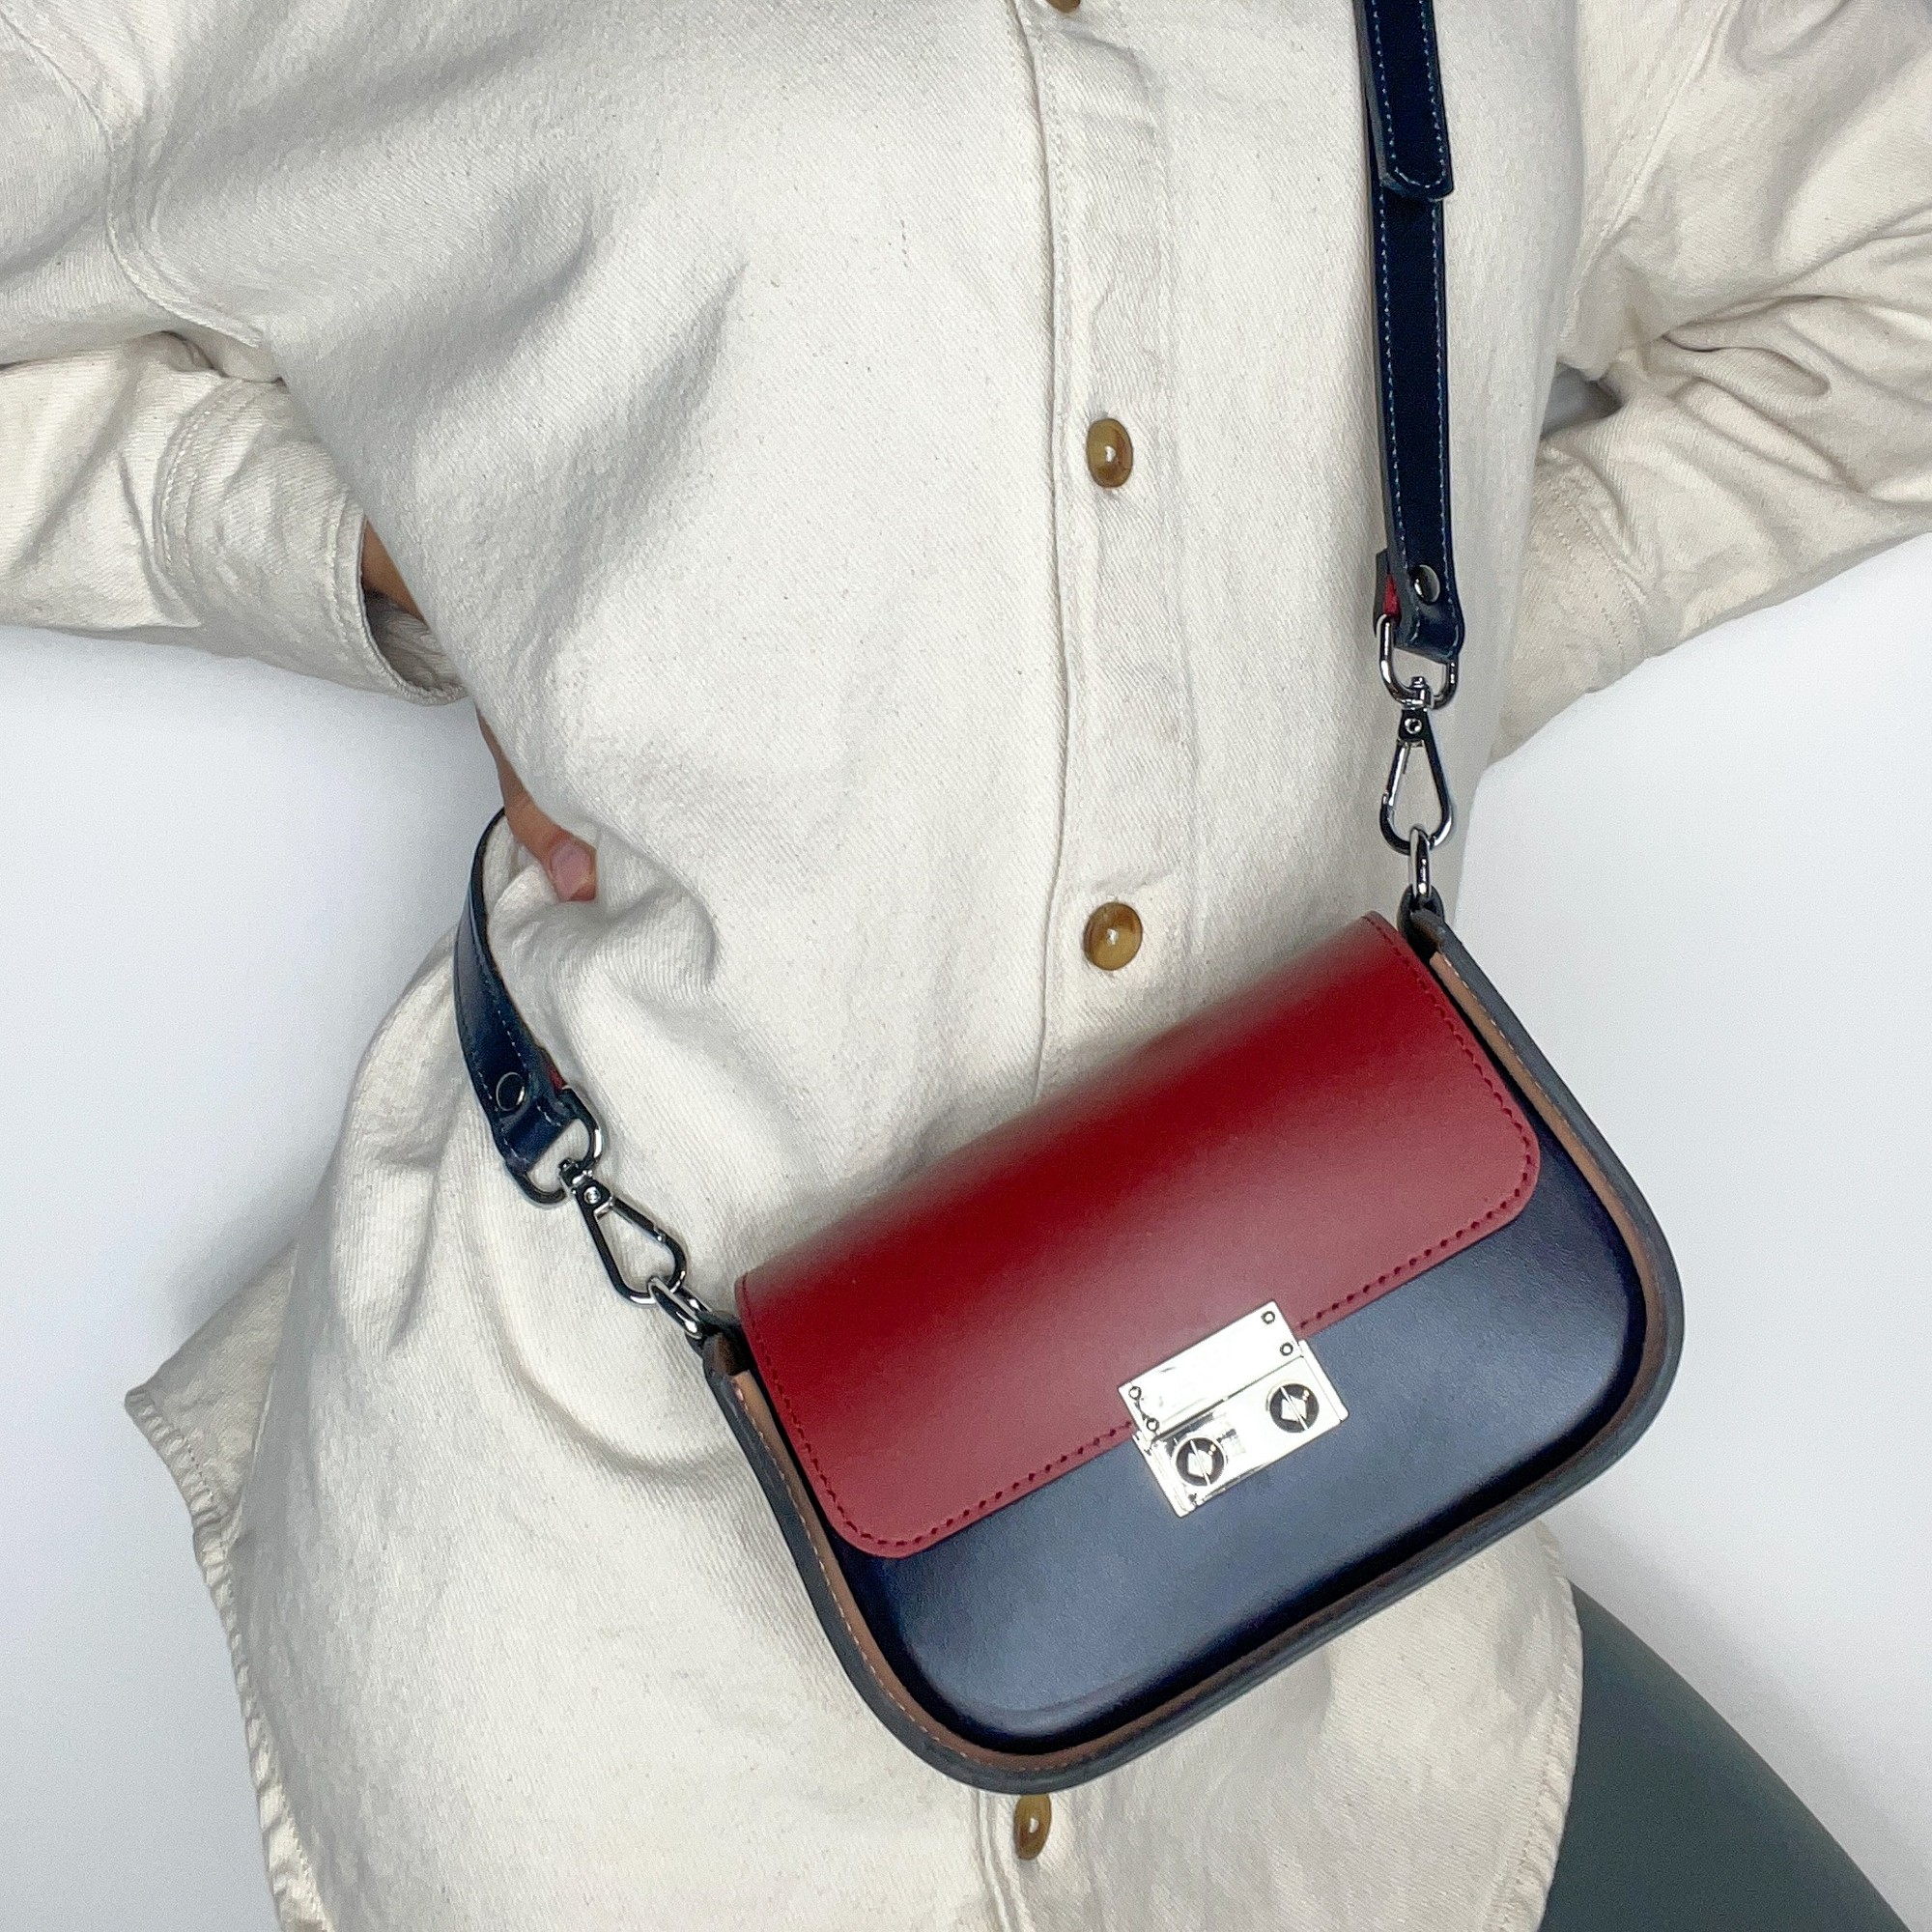 Leather Handbag for Woman, Crossbody Bag, Colorful Leather Purse, Shoulder Bag,  Lamponi Saddle One XS